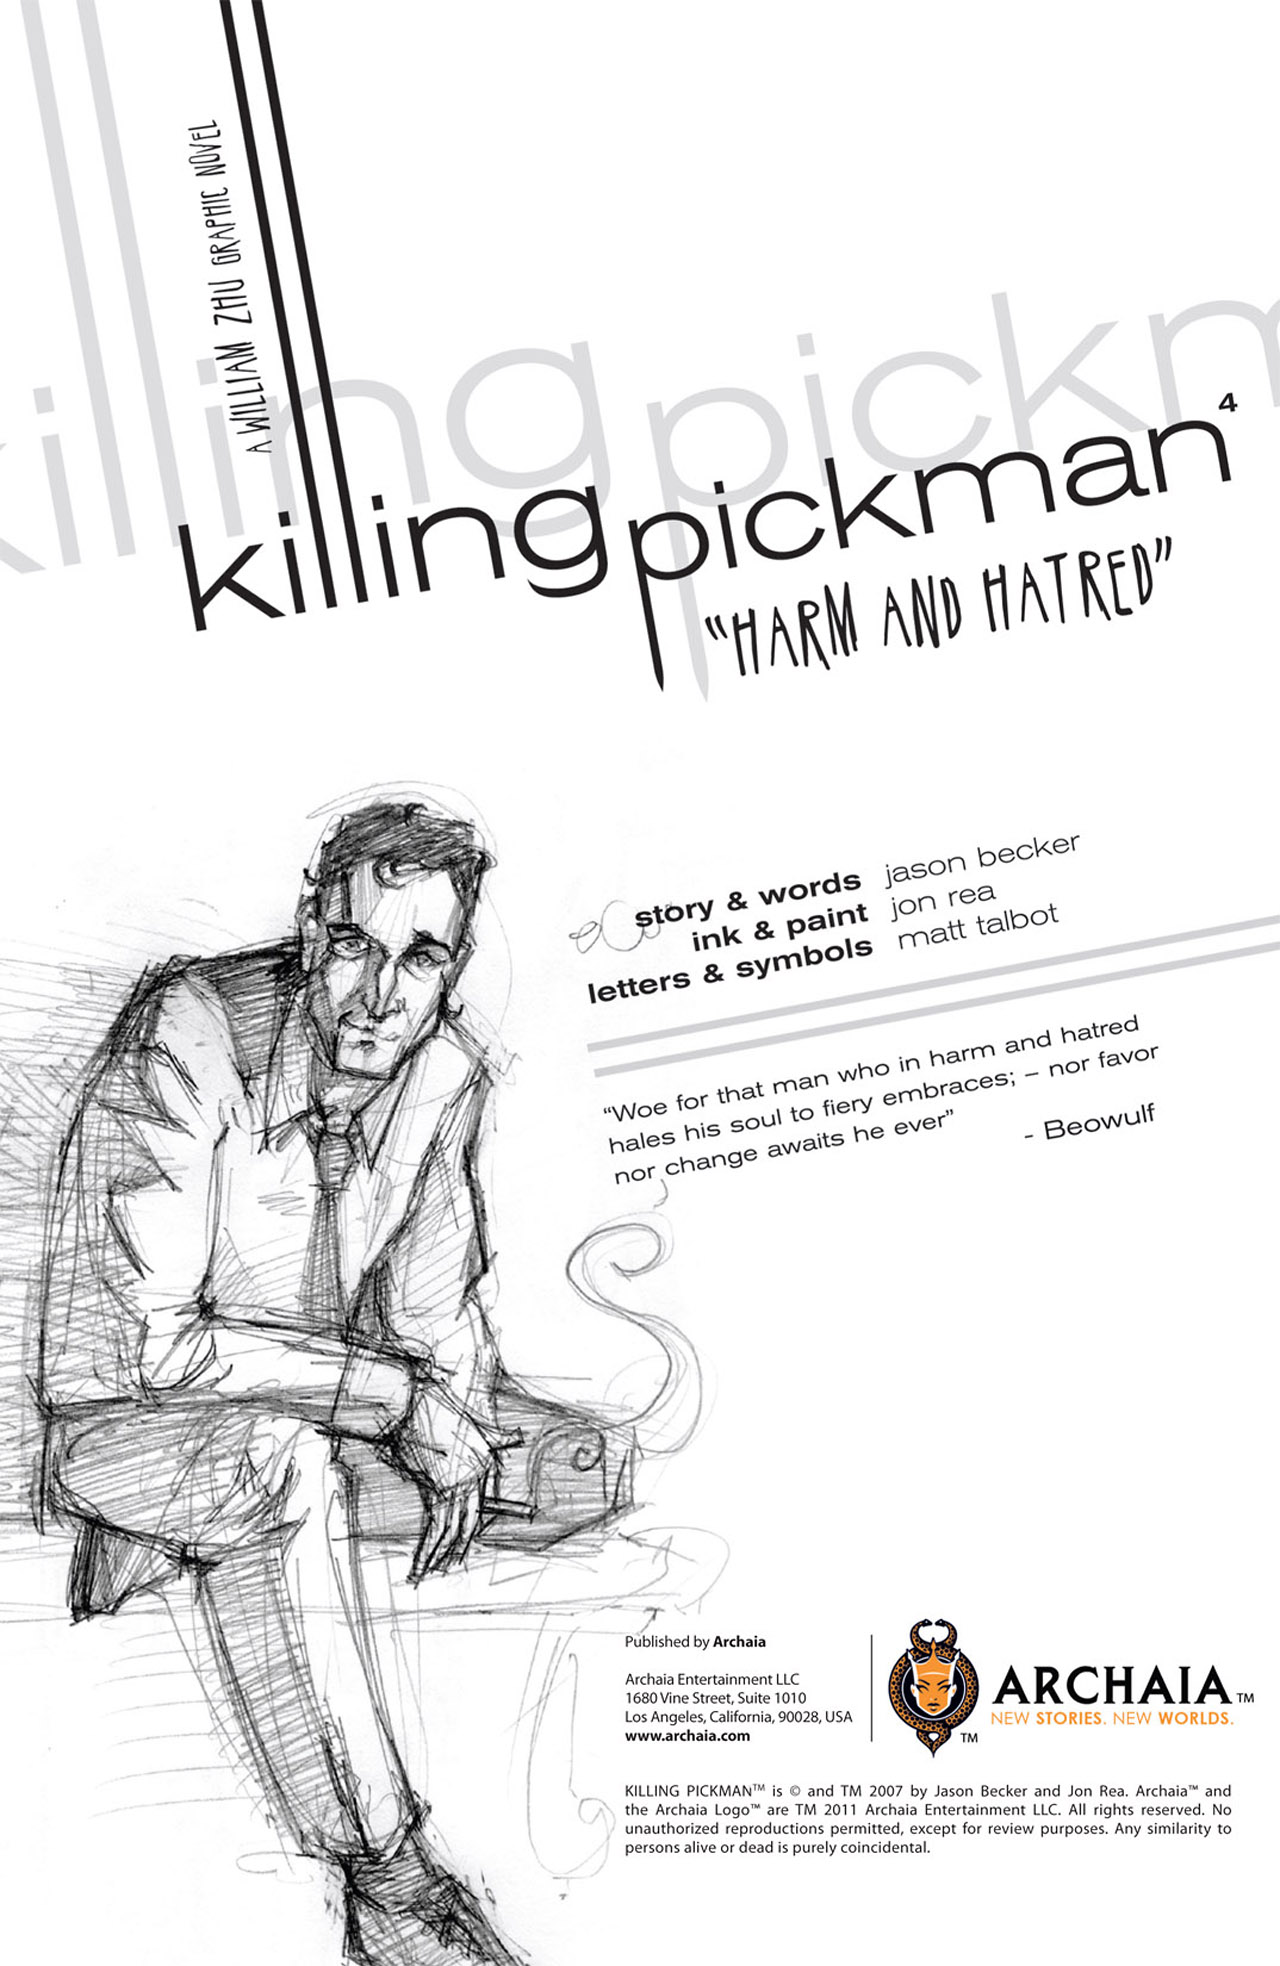 Killing Pickman 4 - Harm and Hatred